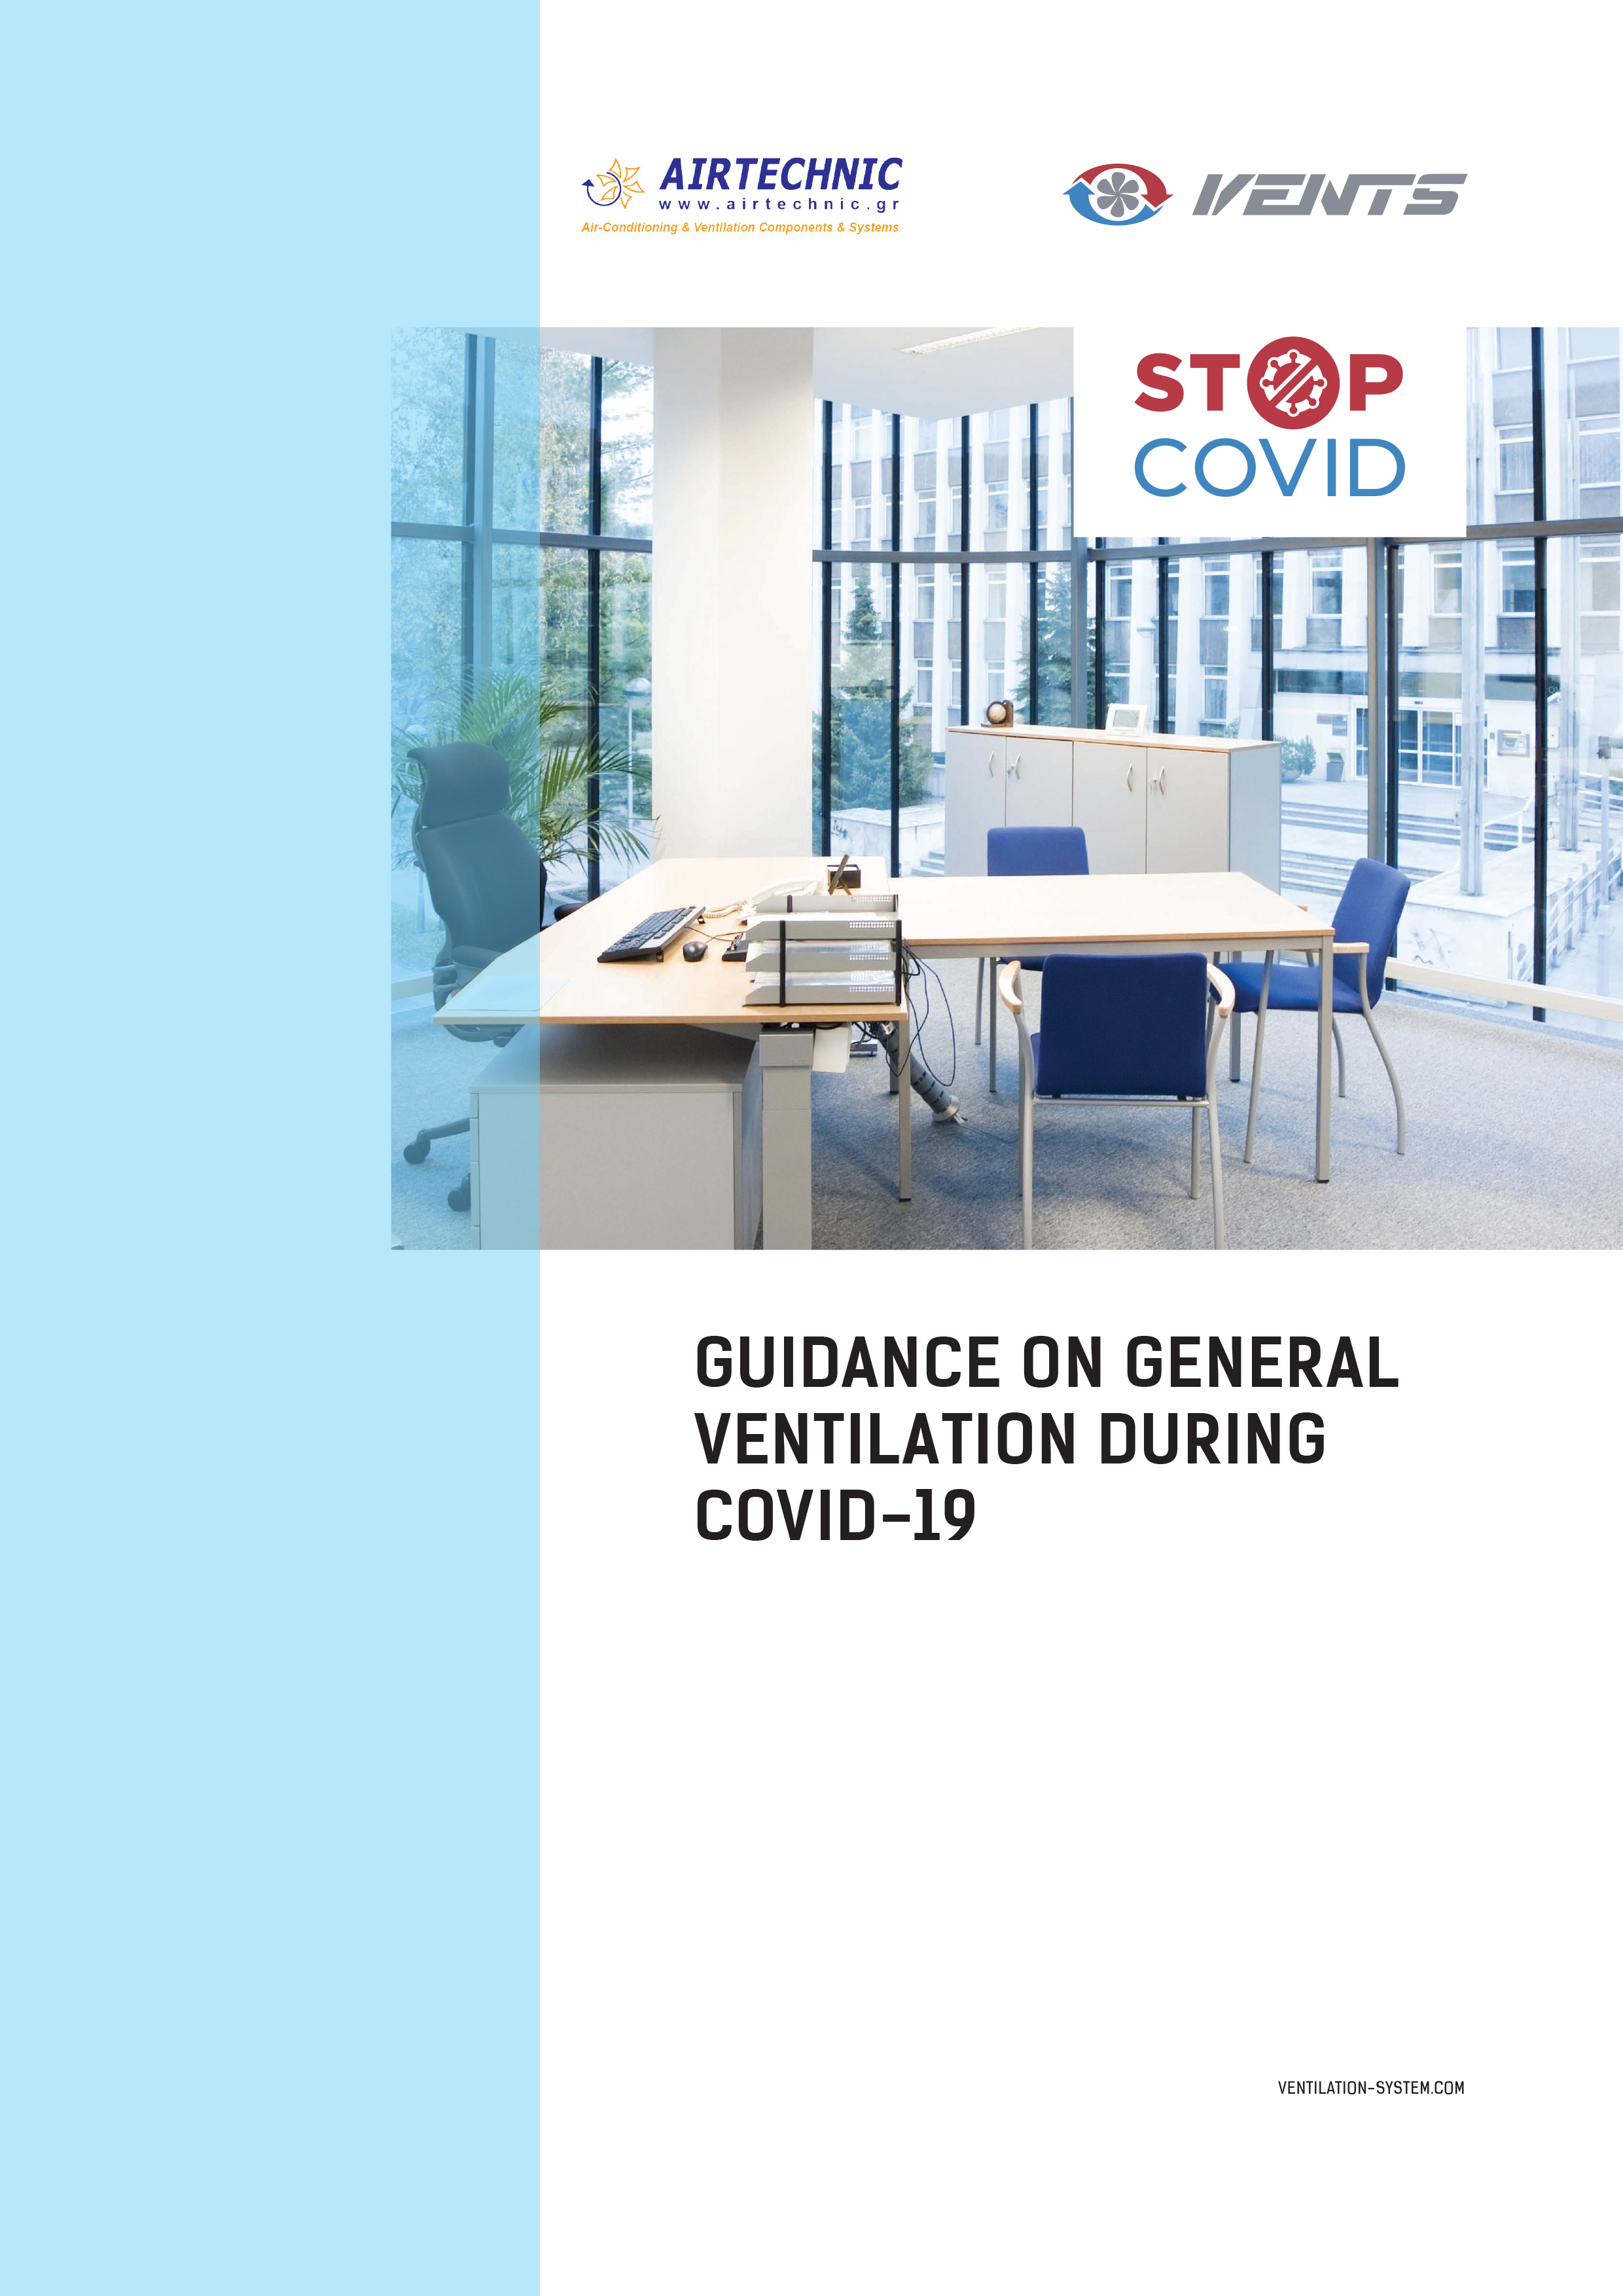 v brochure ventilation guidance 2021 04 en 1